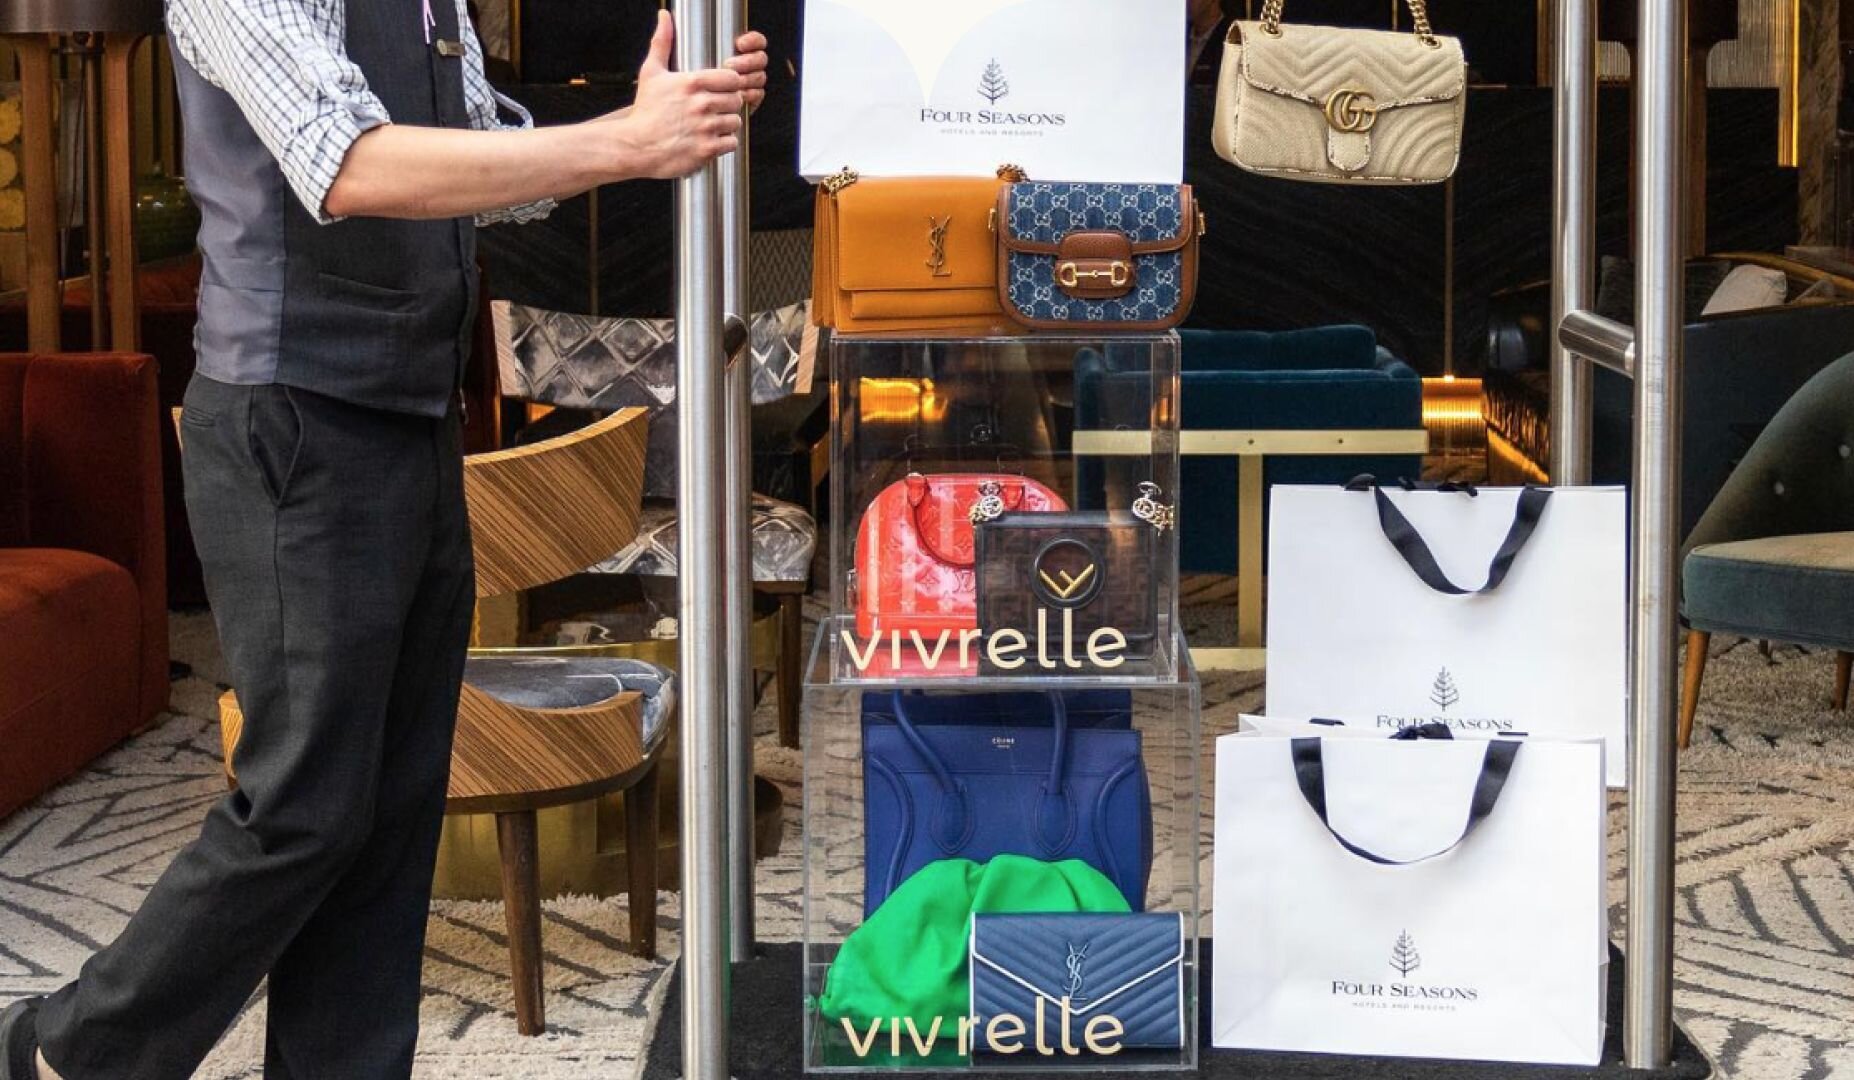 A man maneuvers a cart adorned with Vivrelle bags alongside shopping bags bearing the Four Seasons hotel emblem